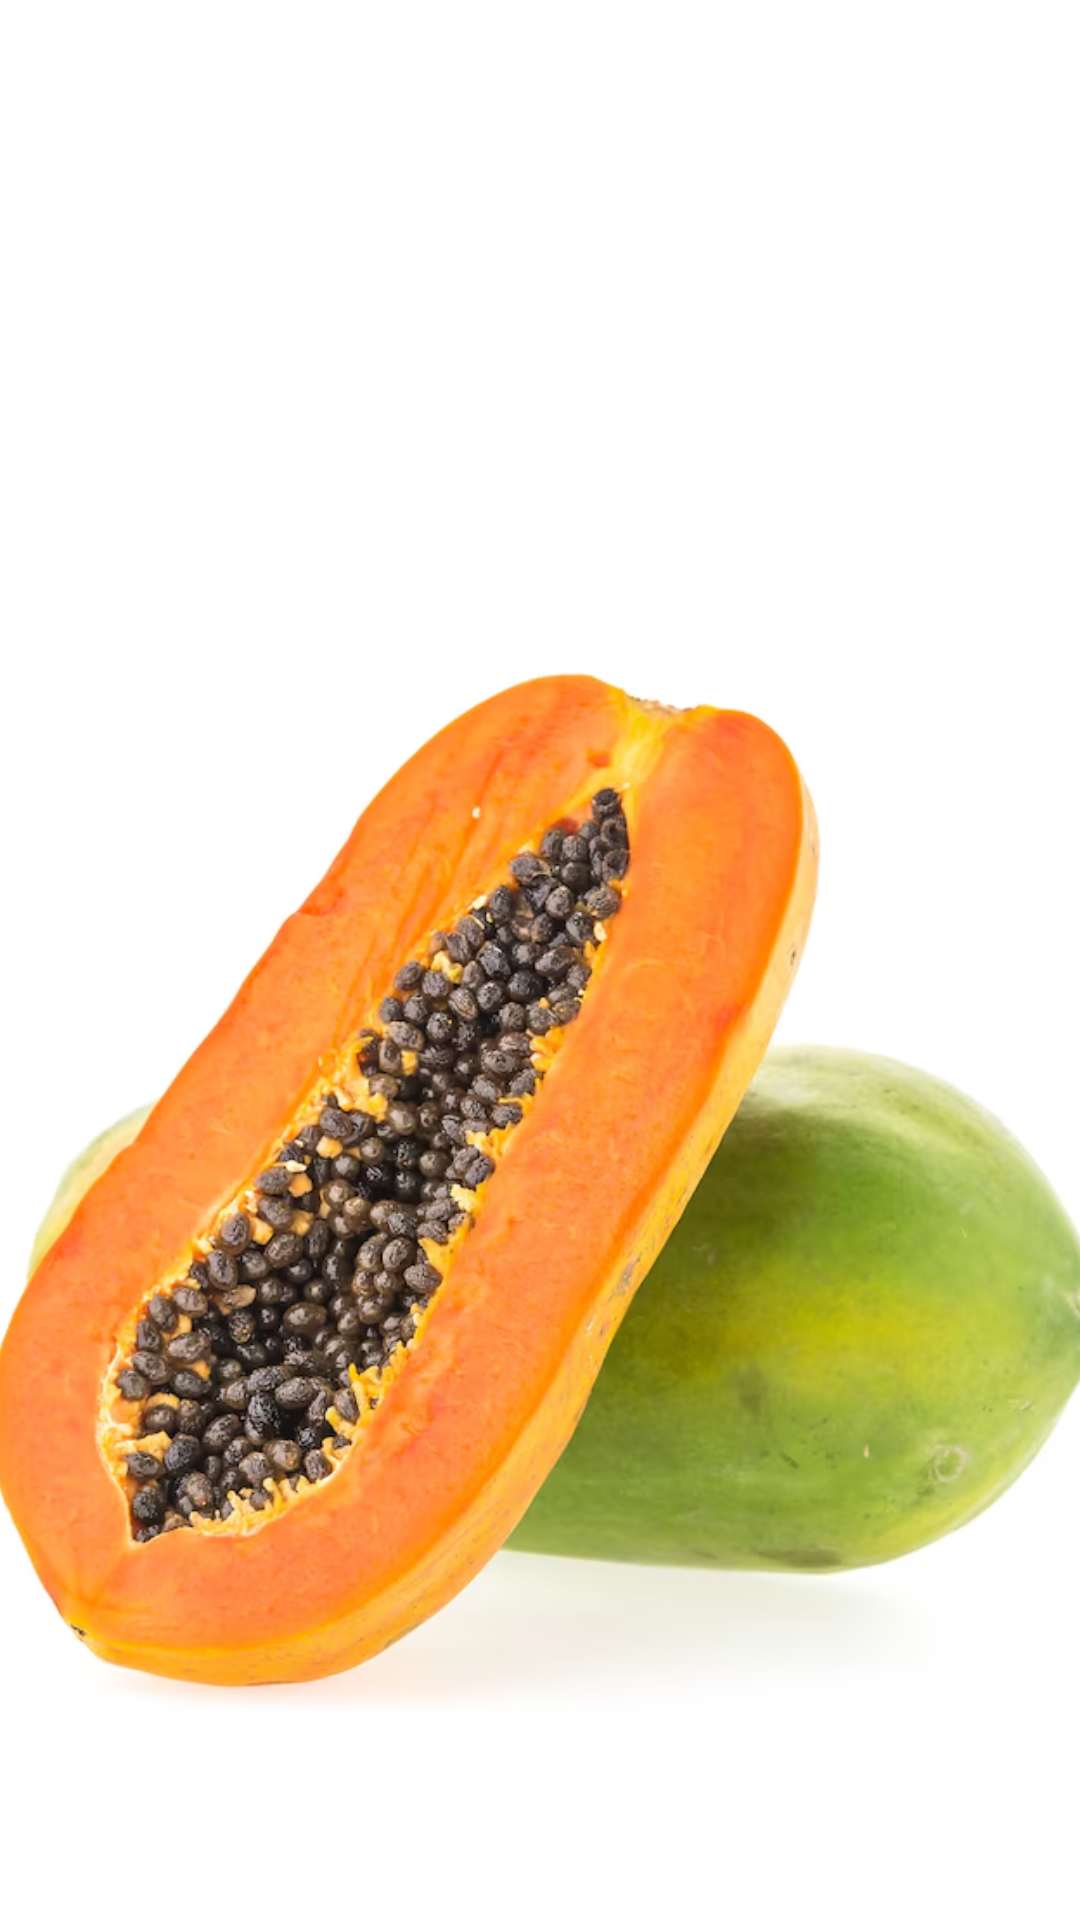   benefits of eating papaya emptoy stomach 